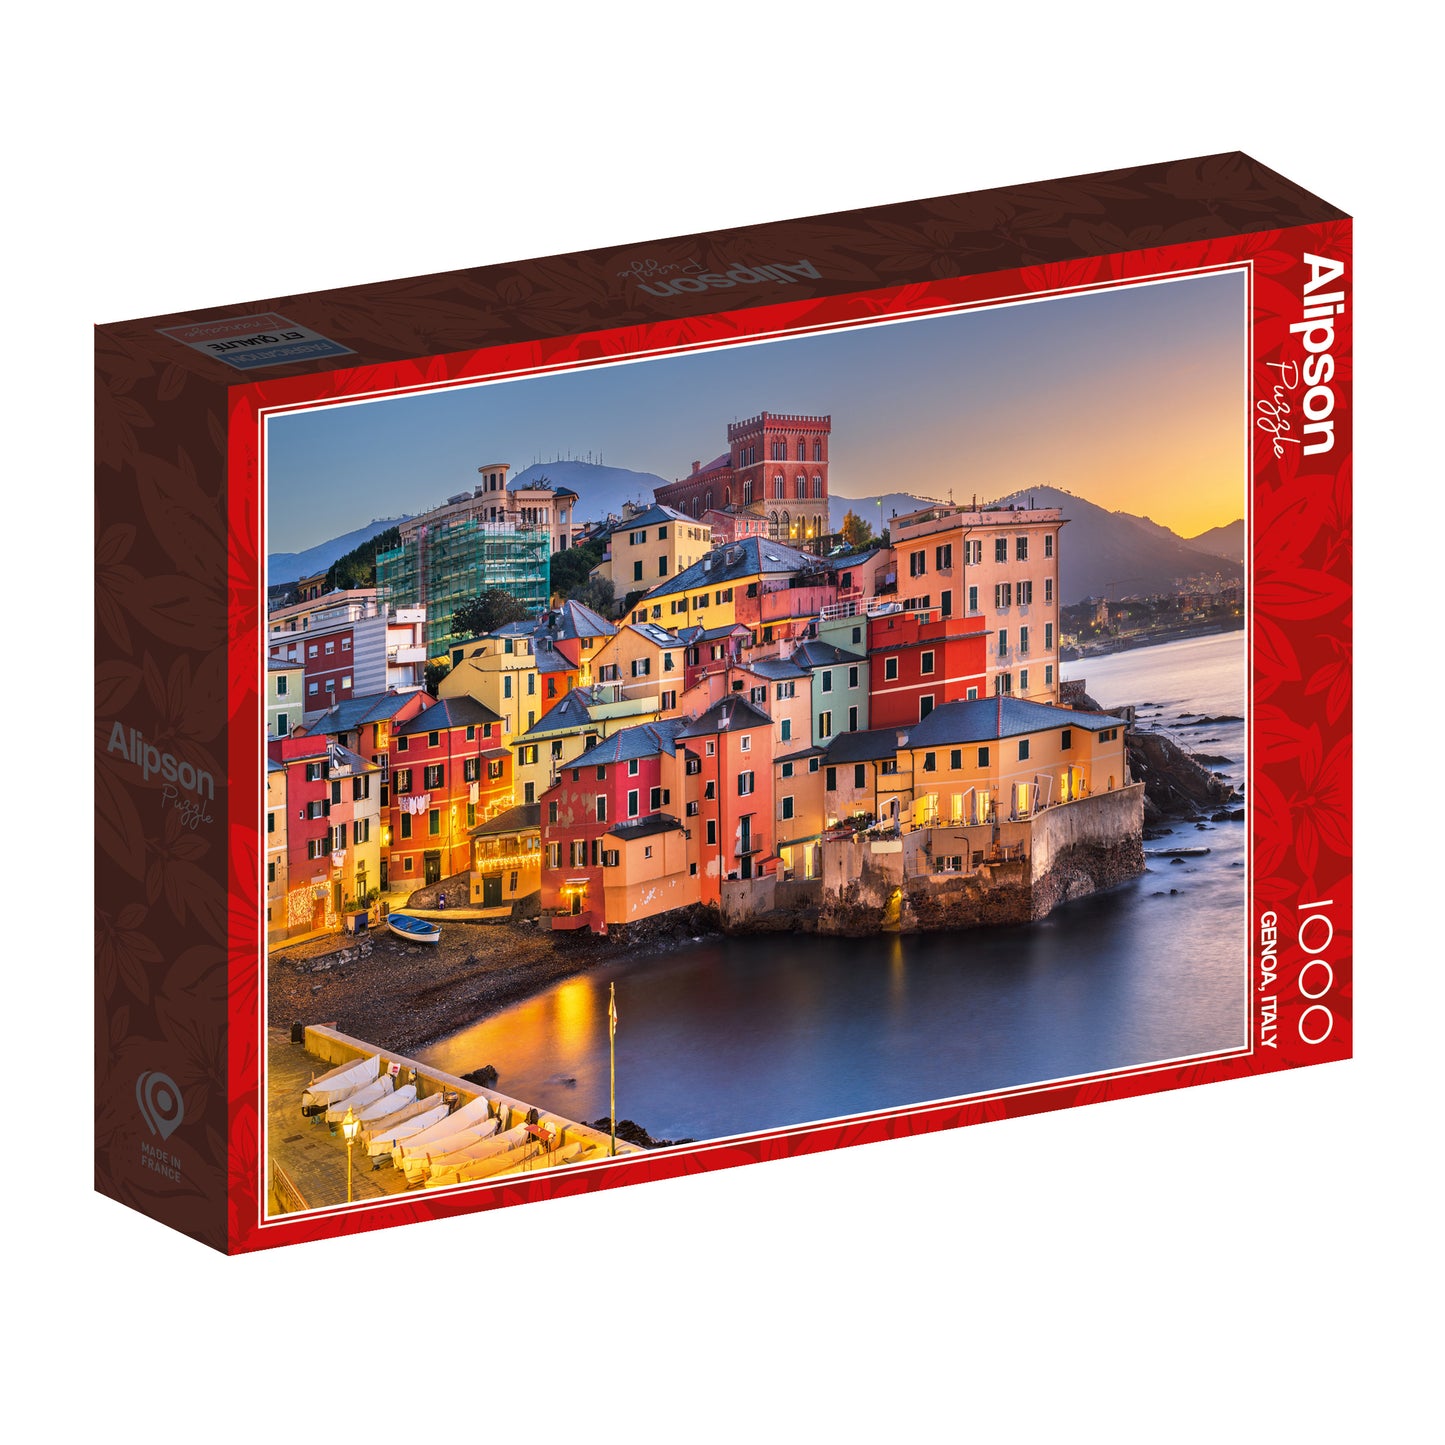 Alipson - Genoa, Italy - 1000 Piece Jigsaw Puzzle